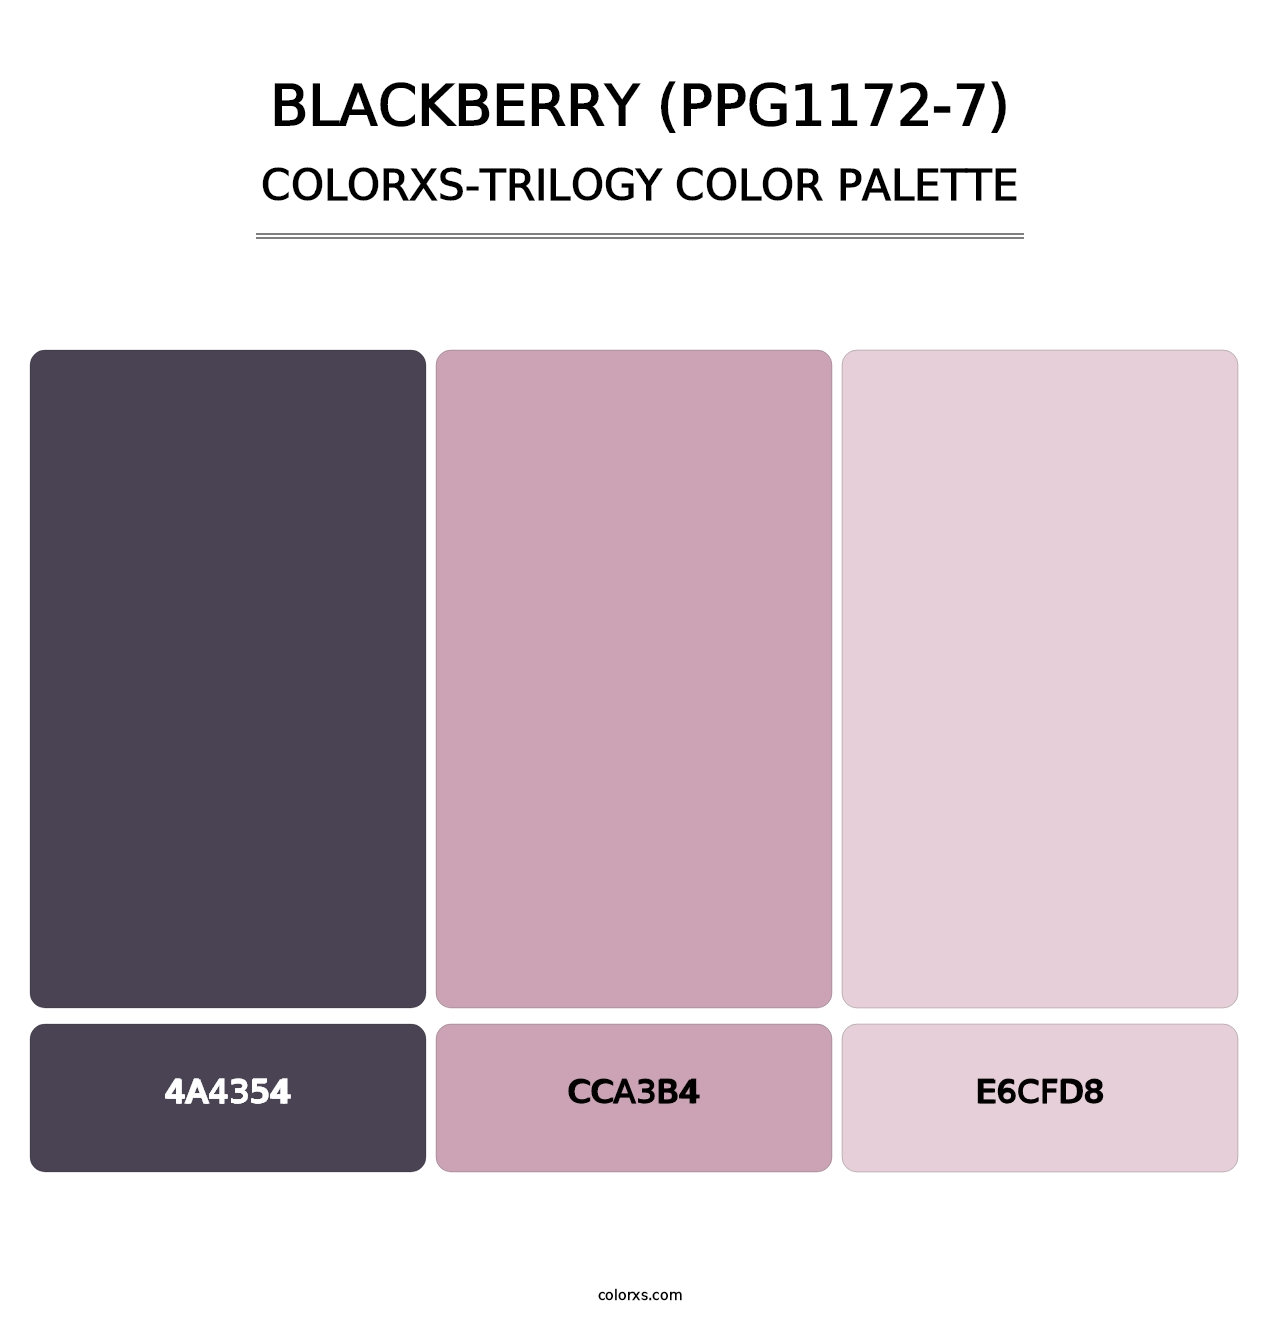 Blackberry (PPG1172-7) - Colorxs Trilogy Palette